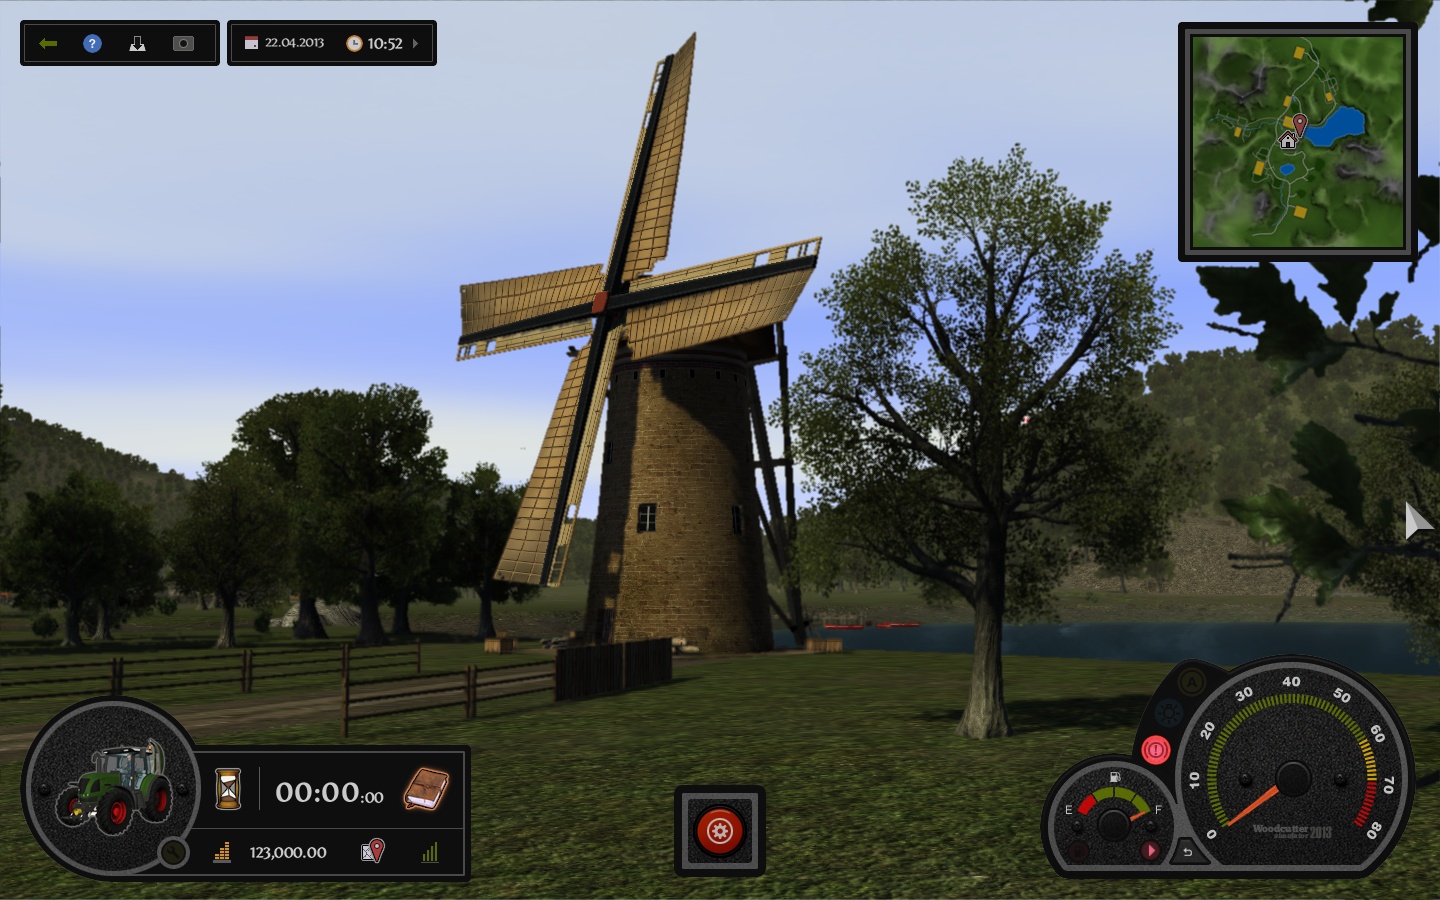 Woodcutter Simulator 2013 on Steam